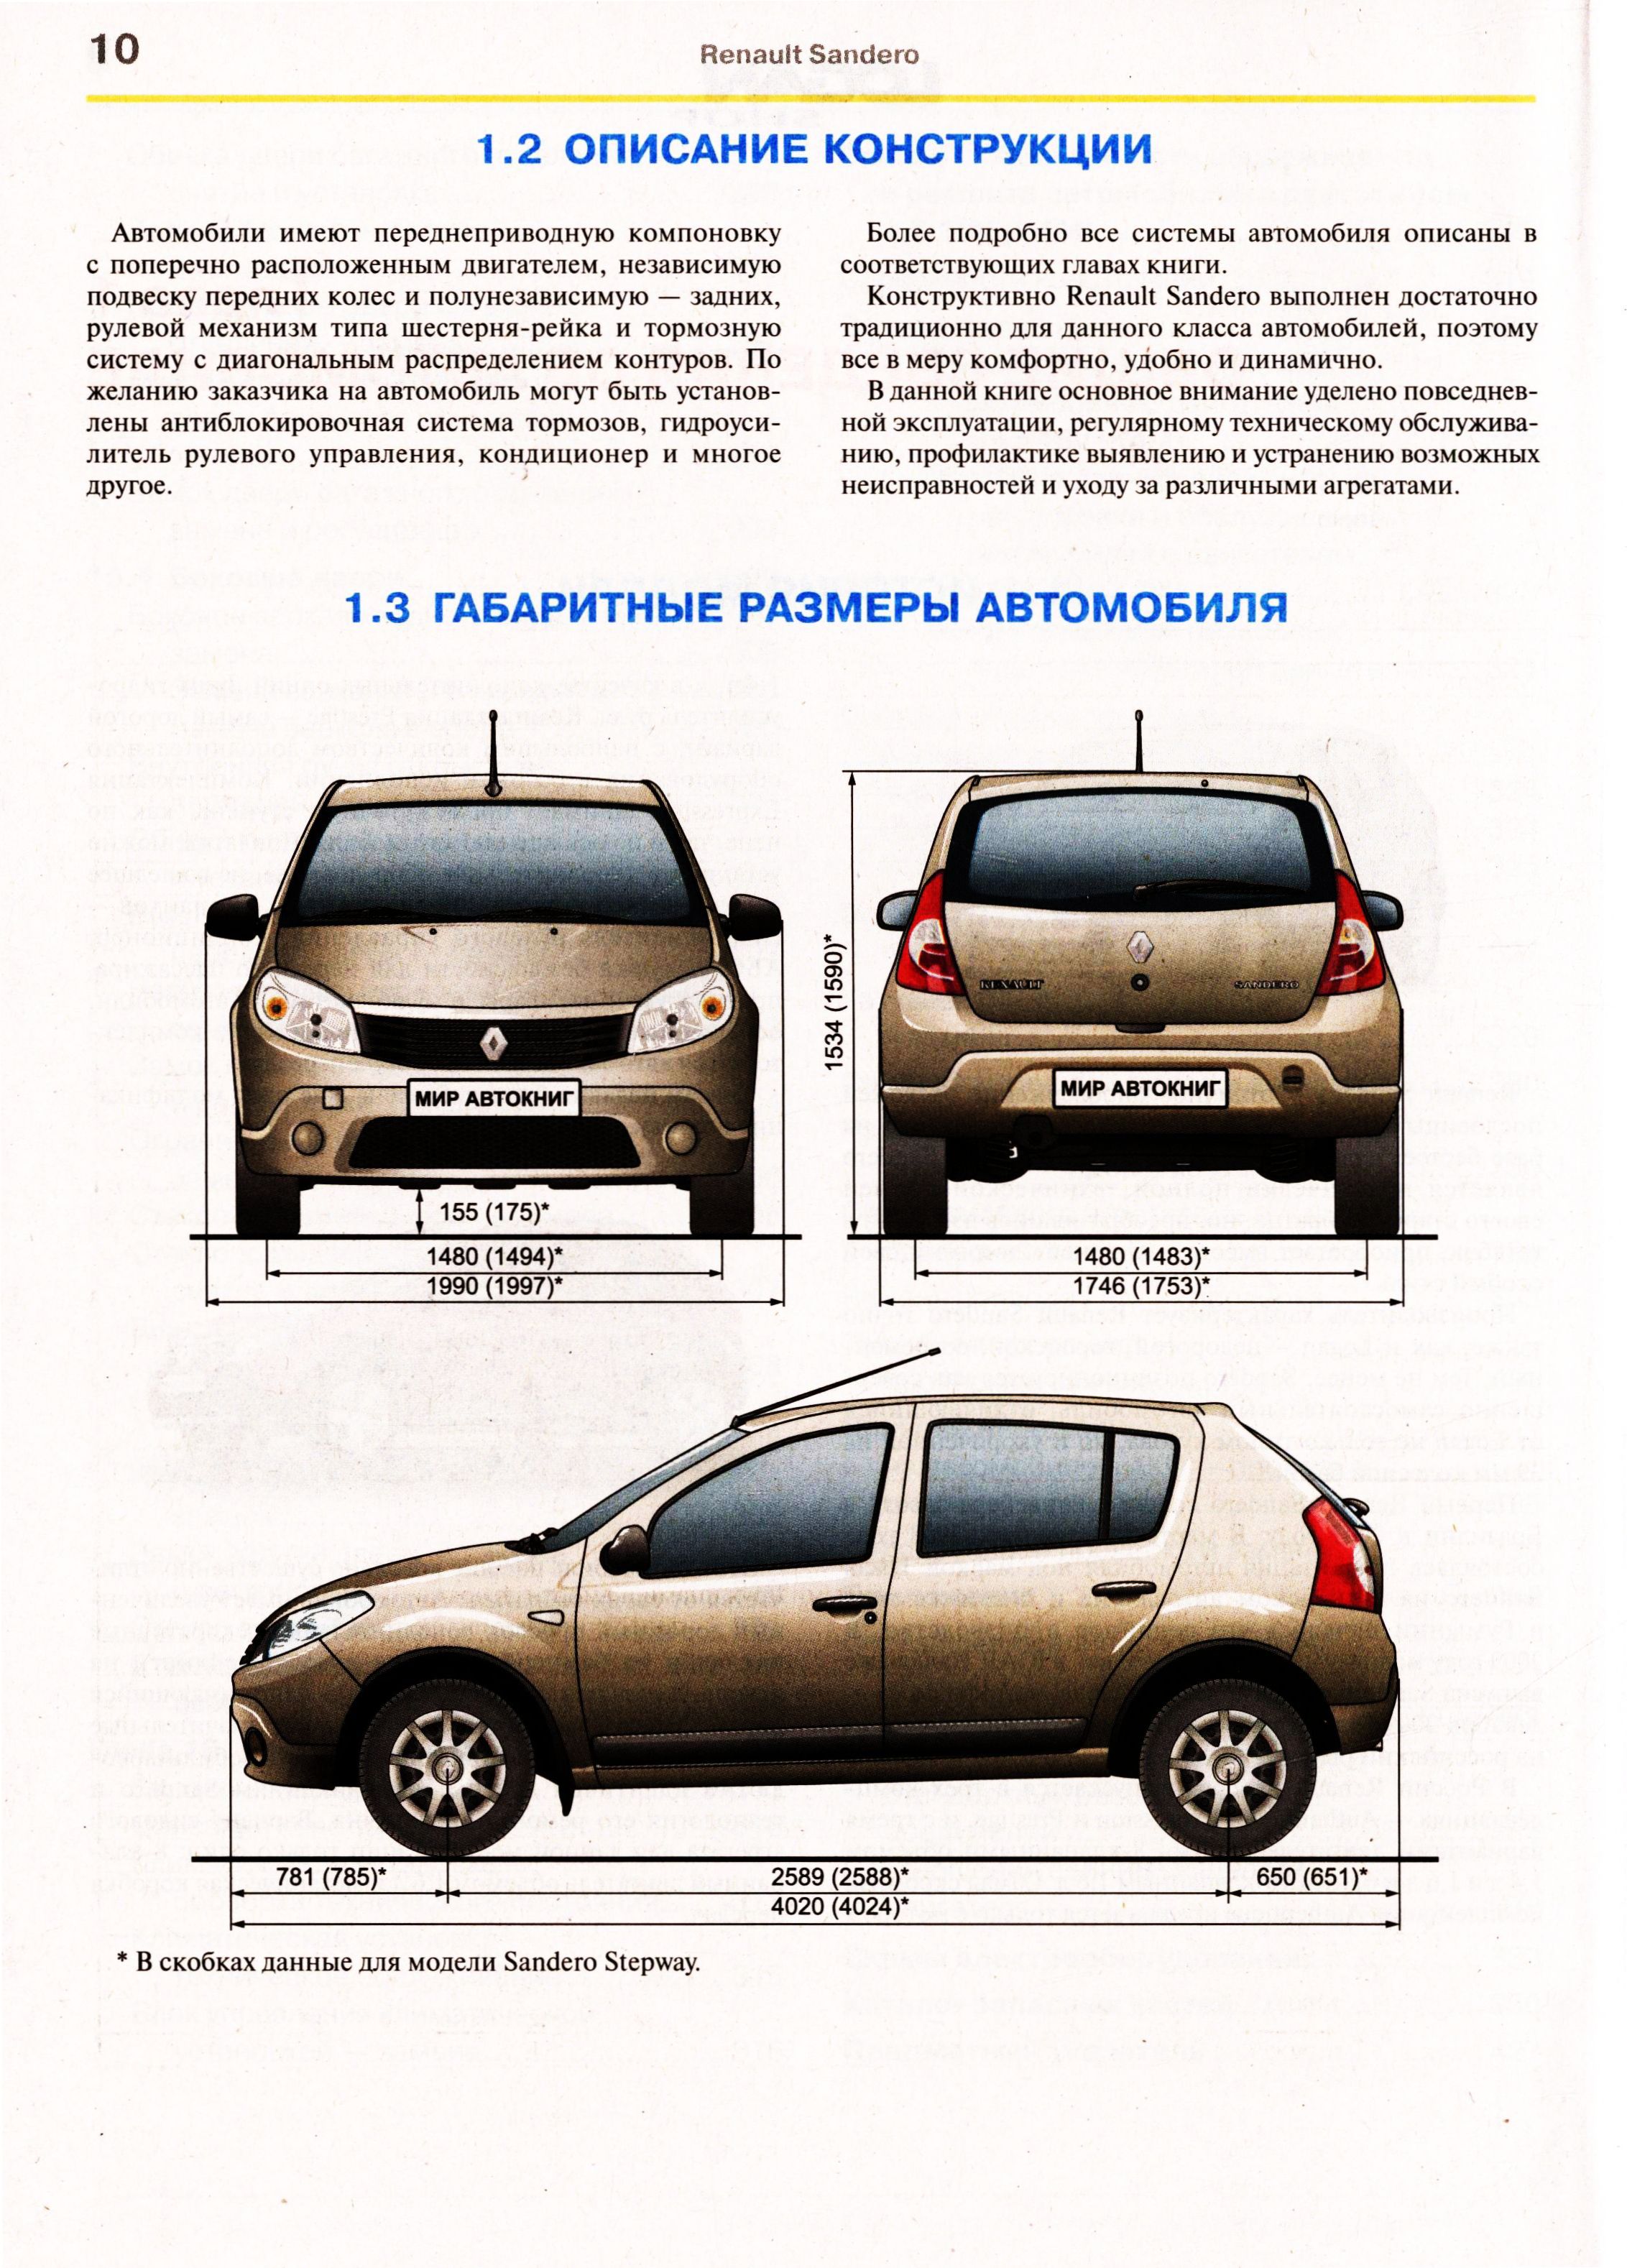 Renault sandero размеры. Технические характеристики автомобиля Renault Sandero 2. Renault Sandero Stepway габариты кузова. Сандеро технические характеристики. Технические характеристики Renault Sandero II.